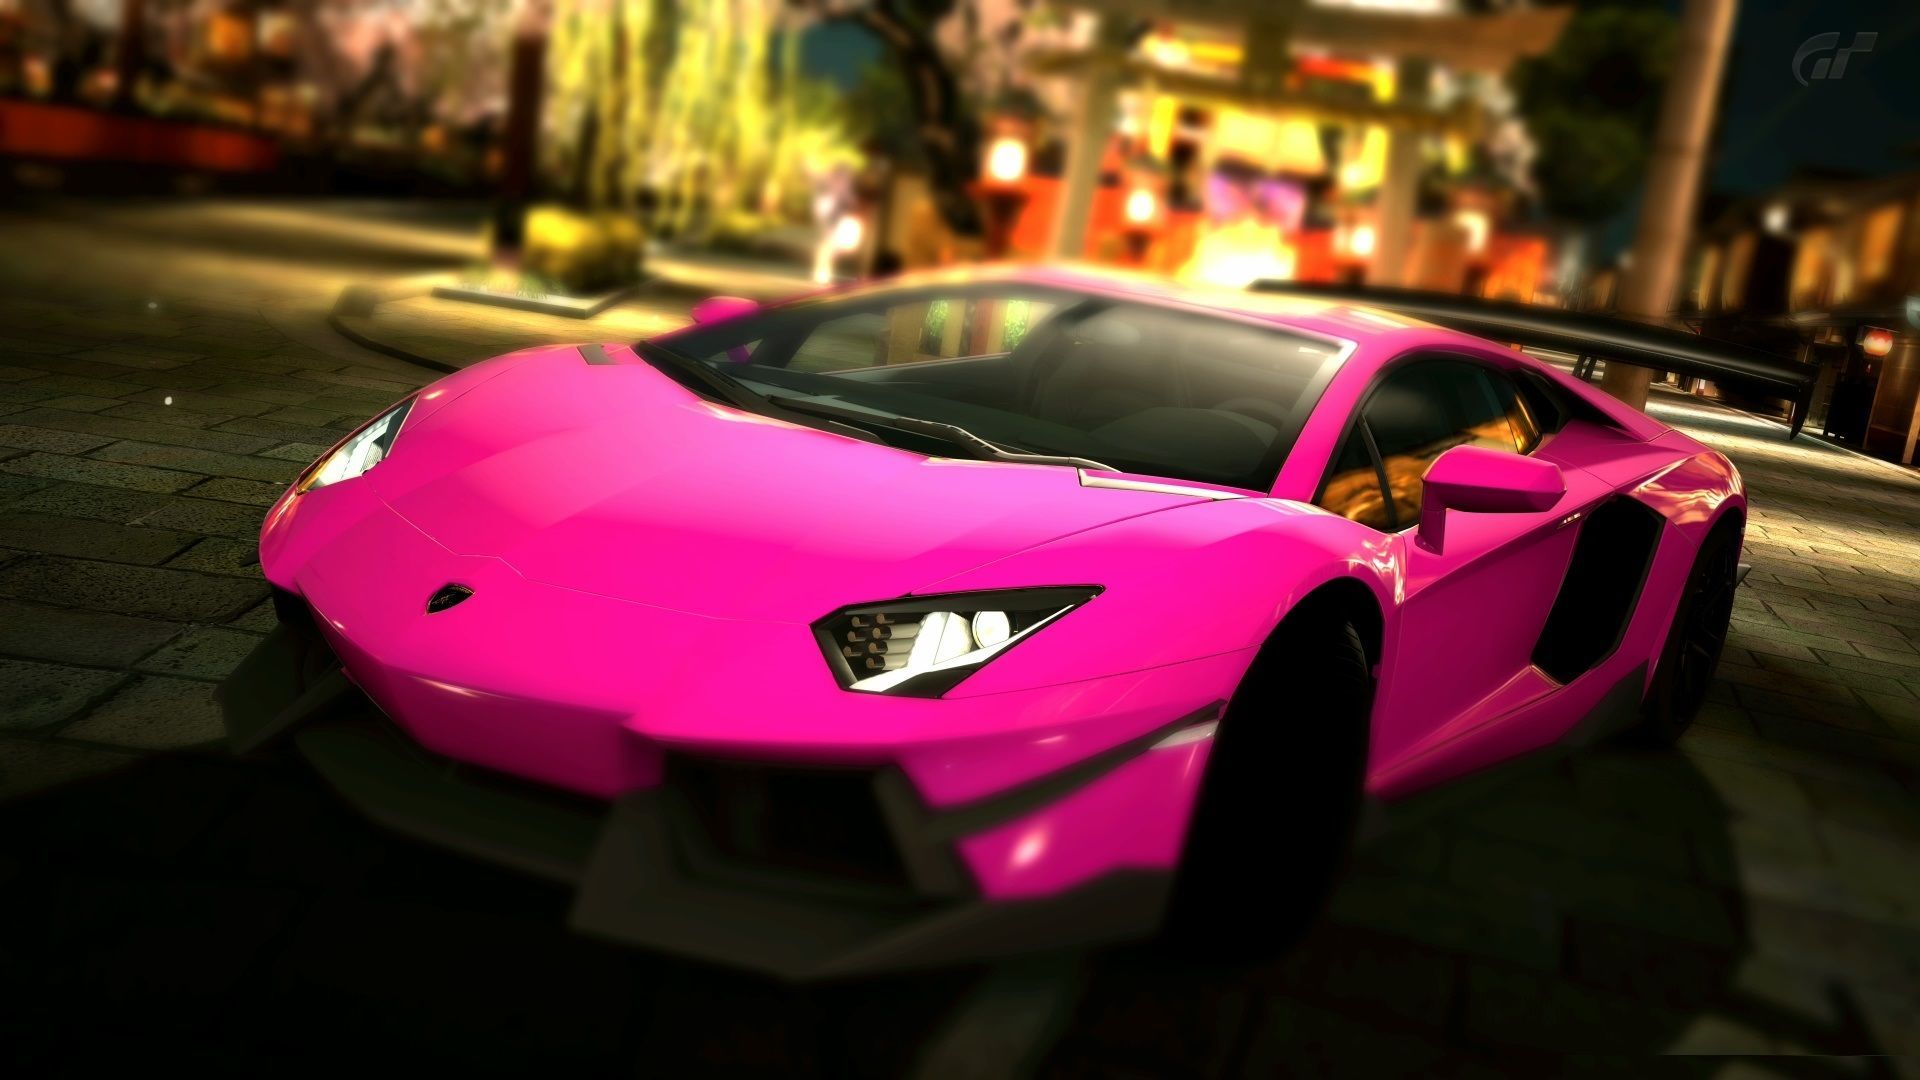 Lamborghini Lamborghini Aventador pink color model car wallpapers ...